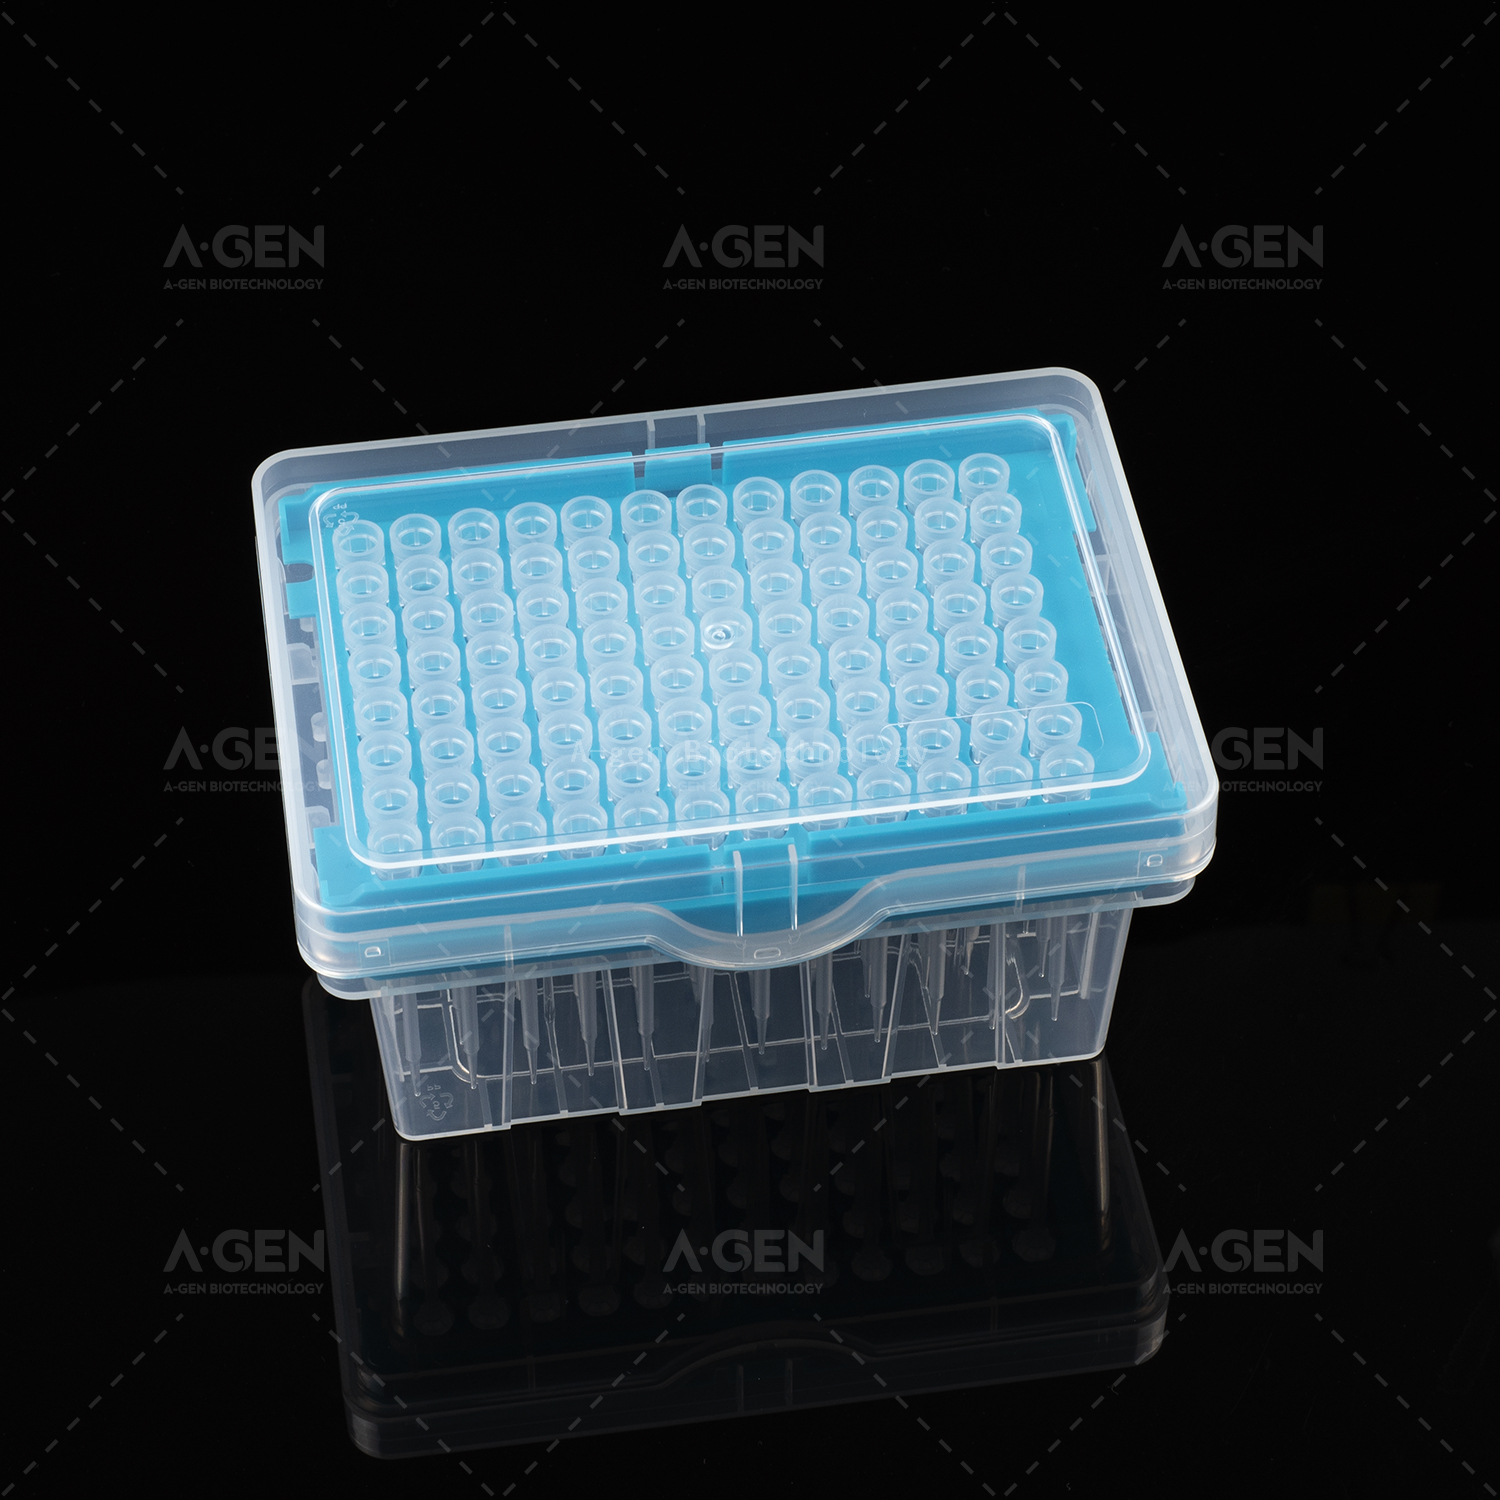 Tecan LiHa 50μL Transparent PP Pipette Tip (Racked,sterilized) for Liquid Transfer No Filter TT-50-RSL Low Residual